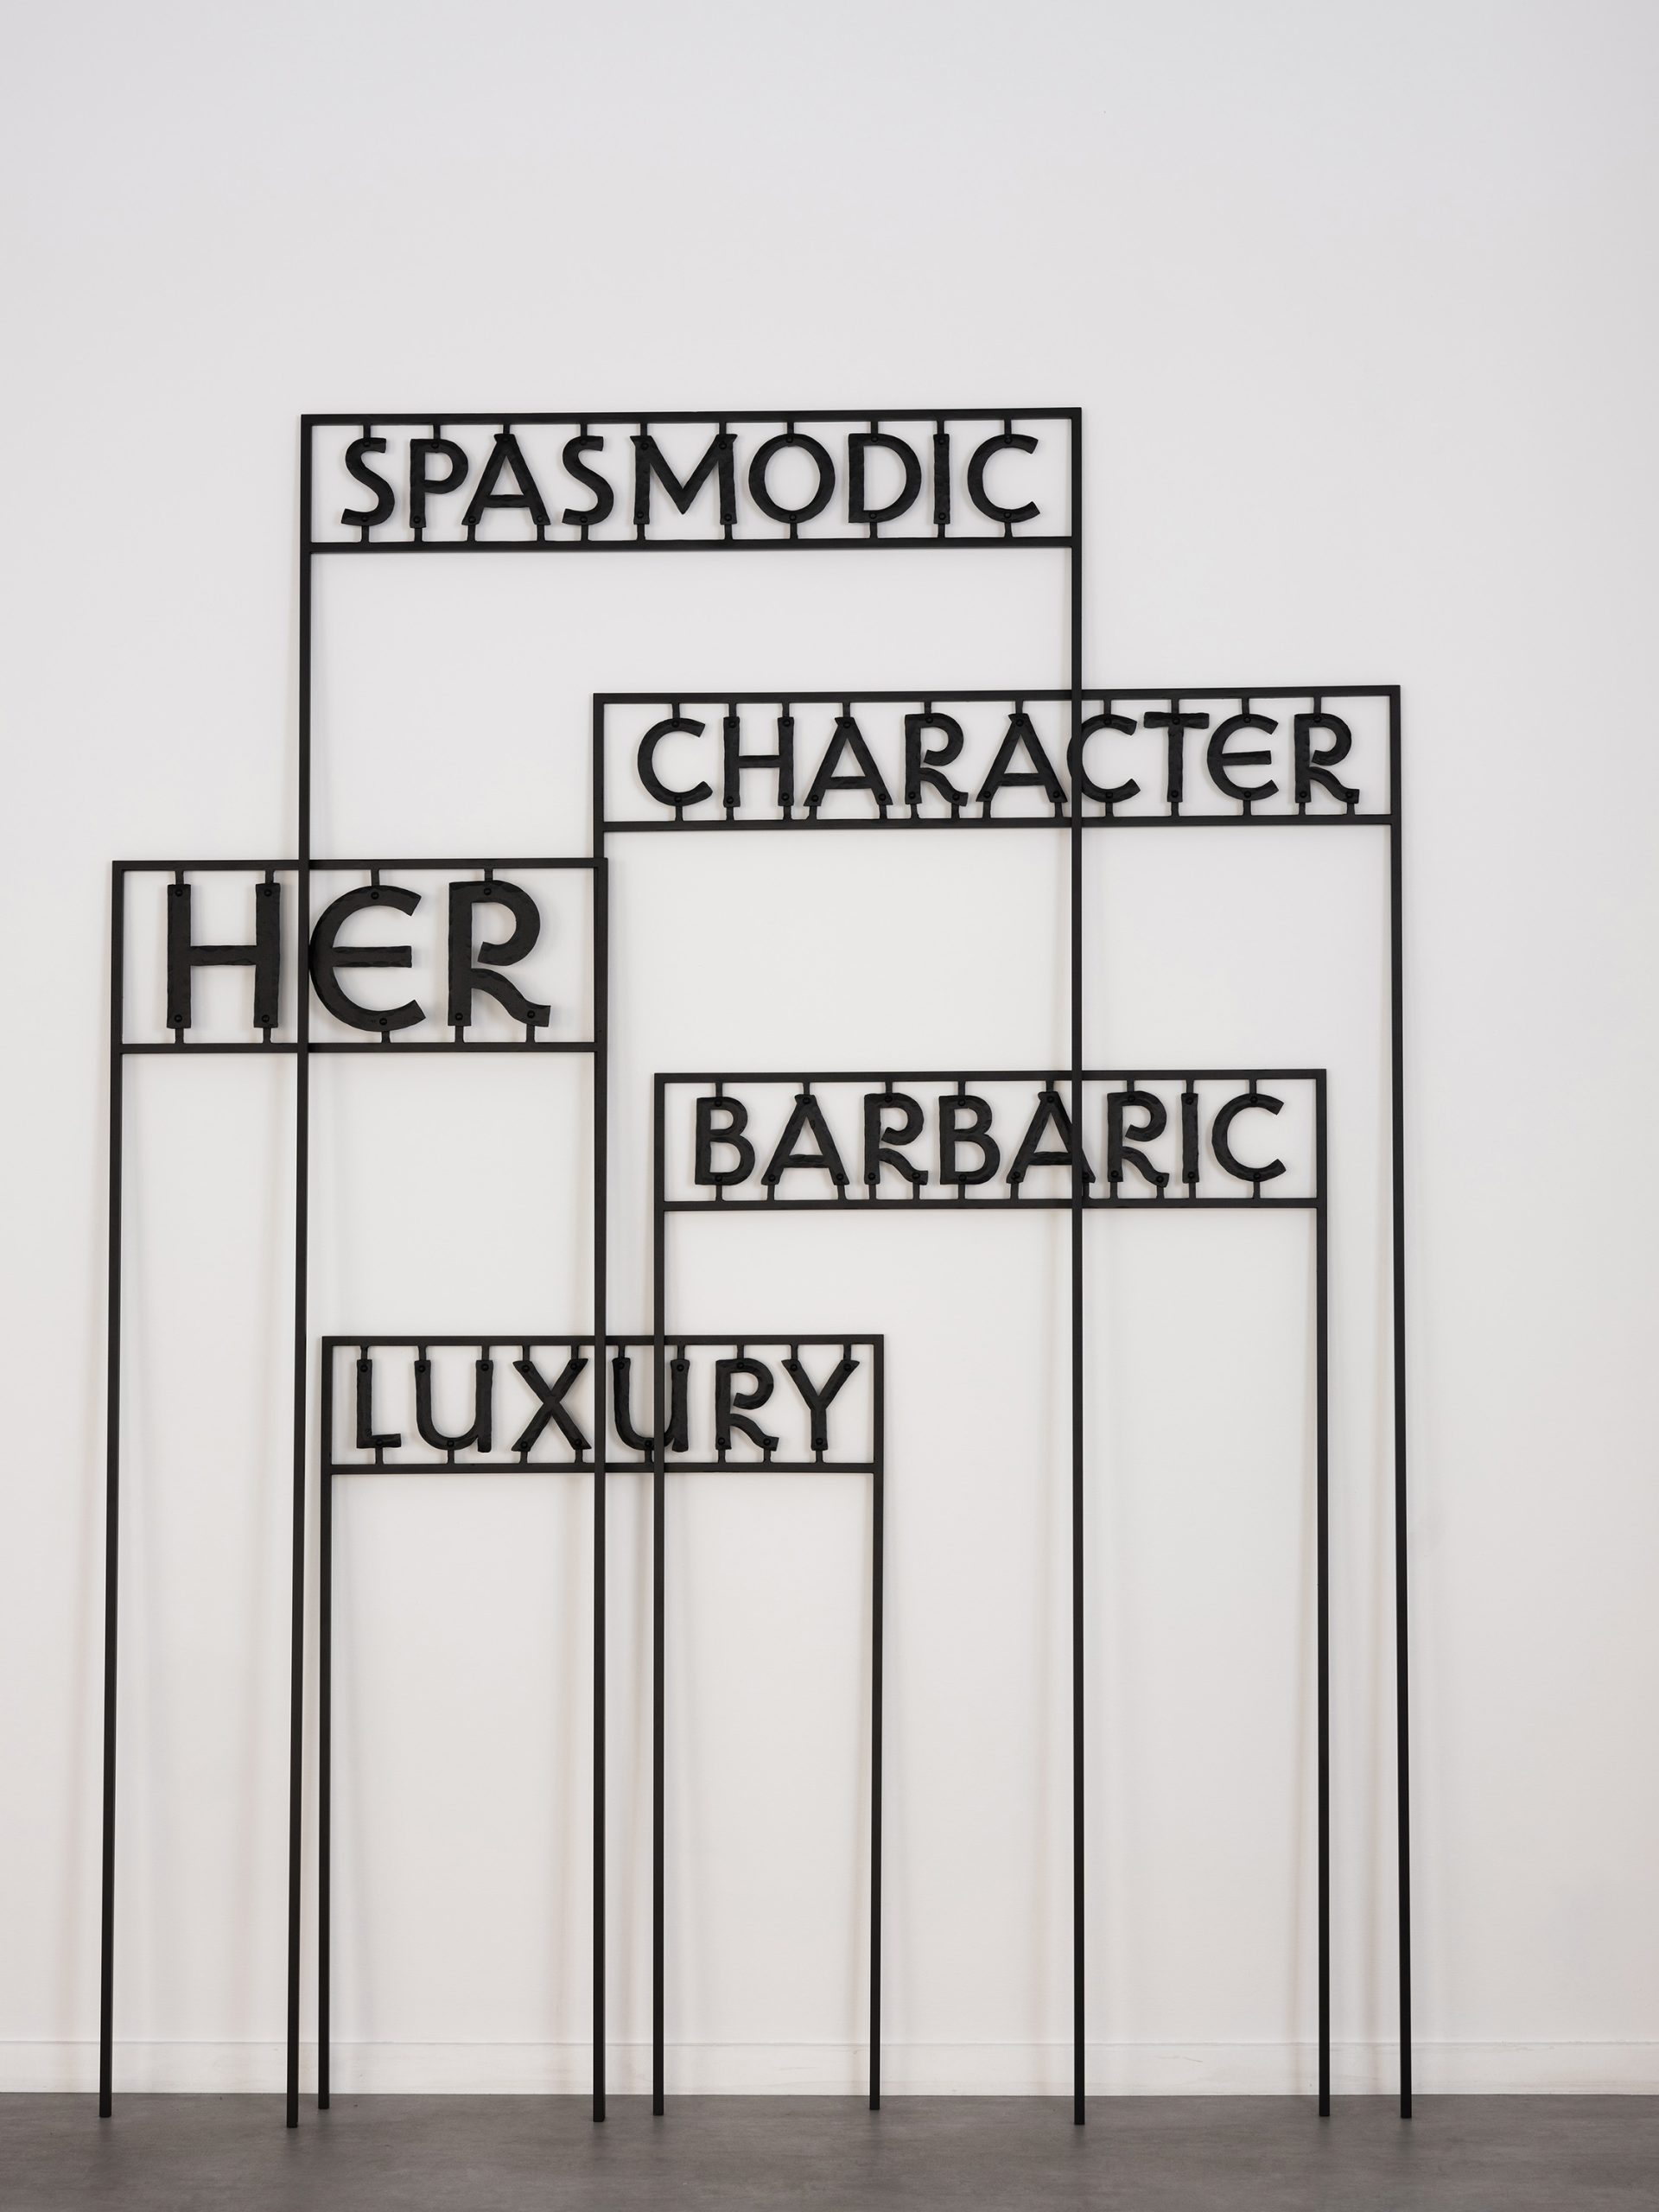 Her Barbaric Luxury - TROTOAR